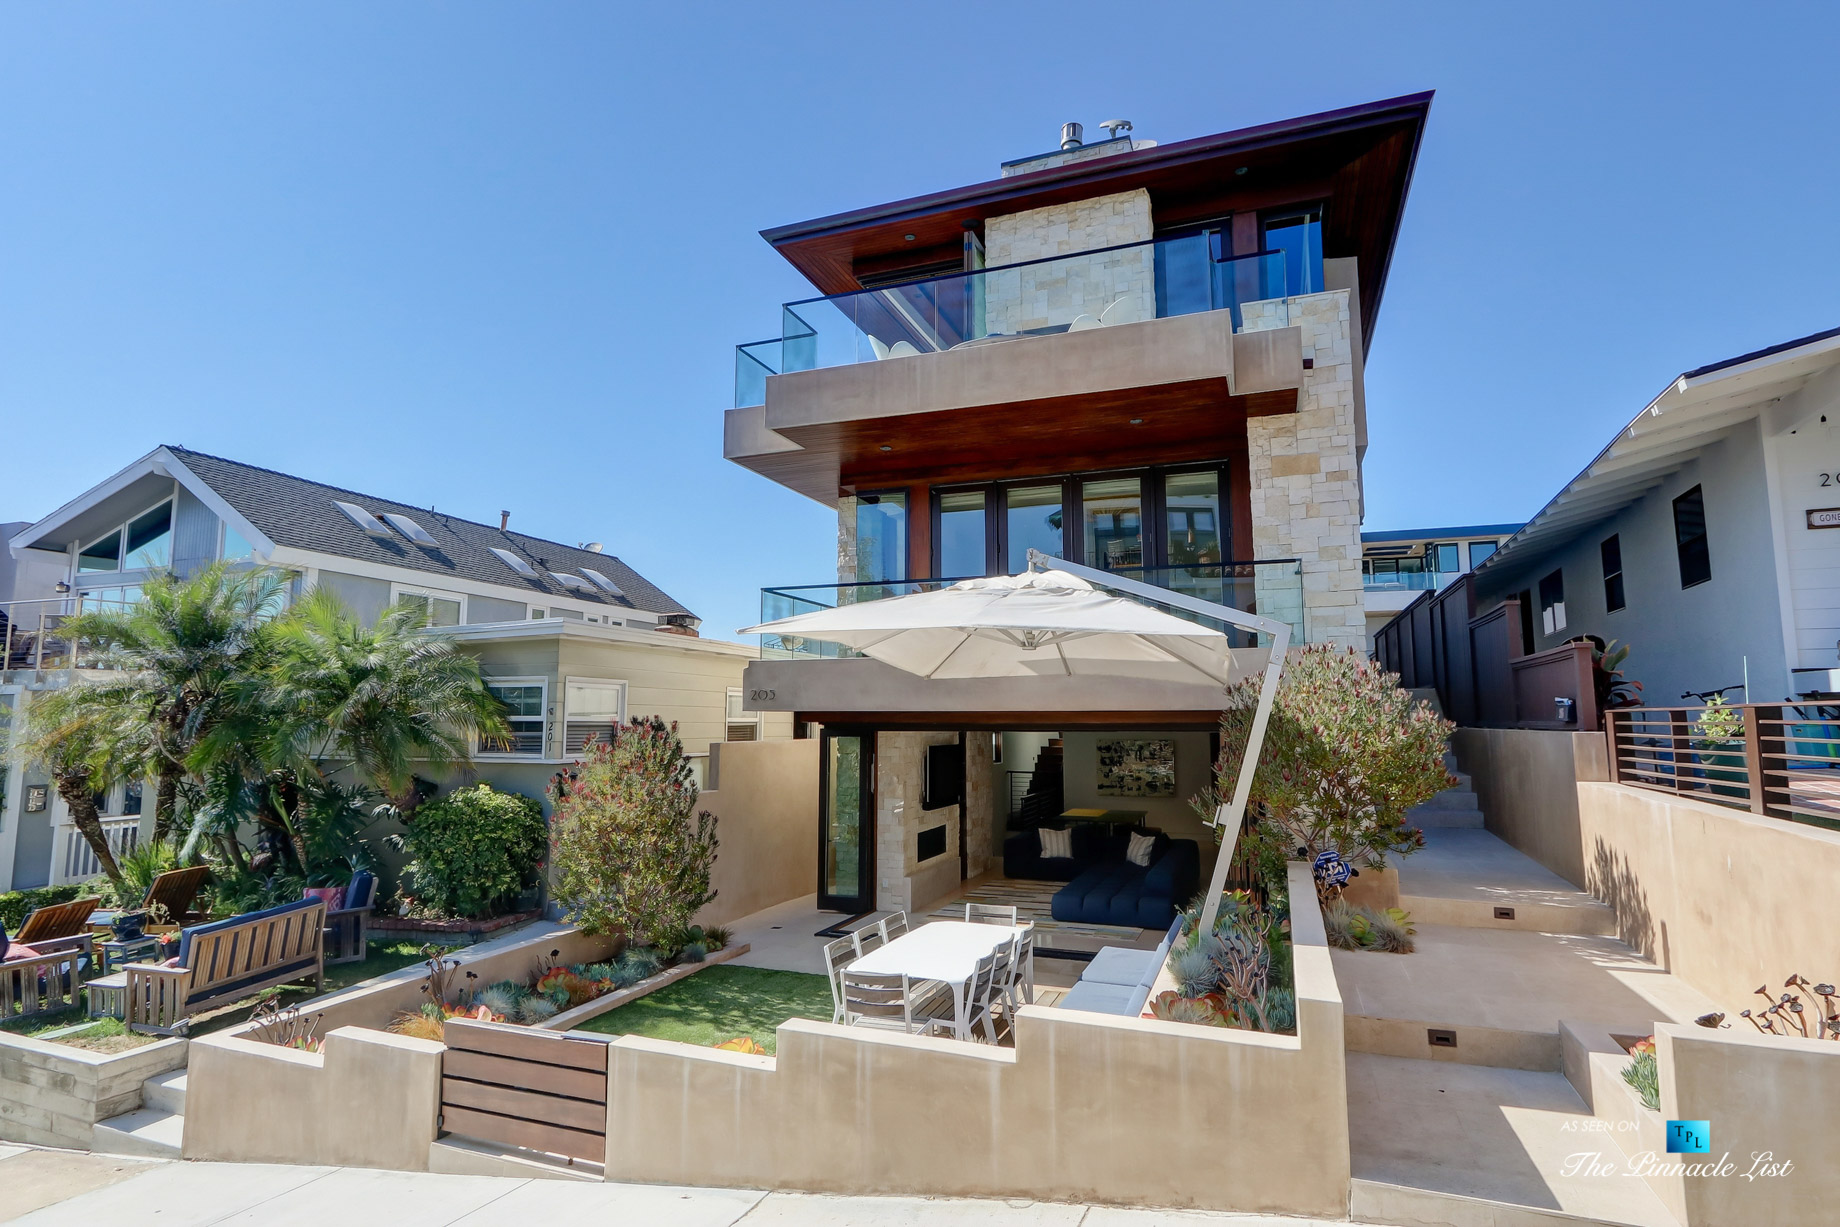 205 20th Street, Manhattan Beach, CA, USA - Front Exterior - Luxury Real Estate - Ocean View Home